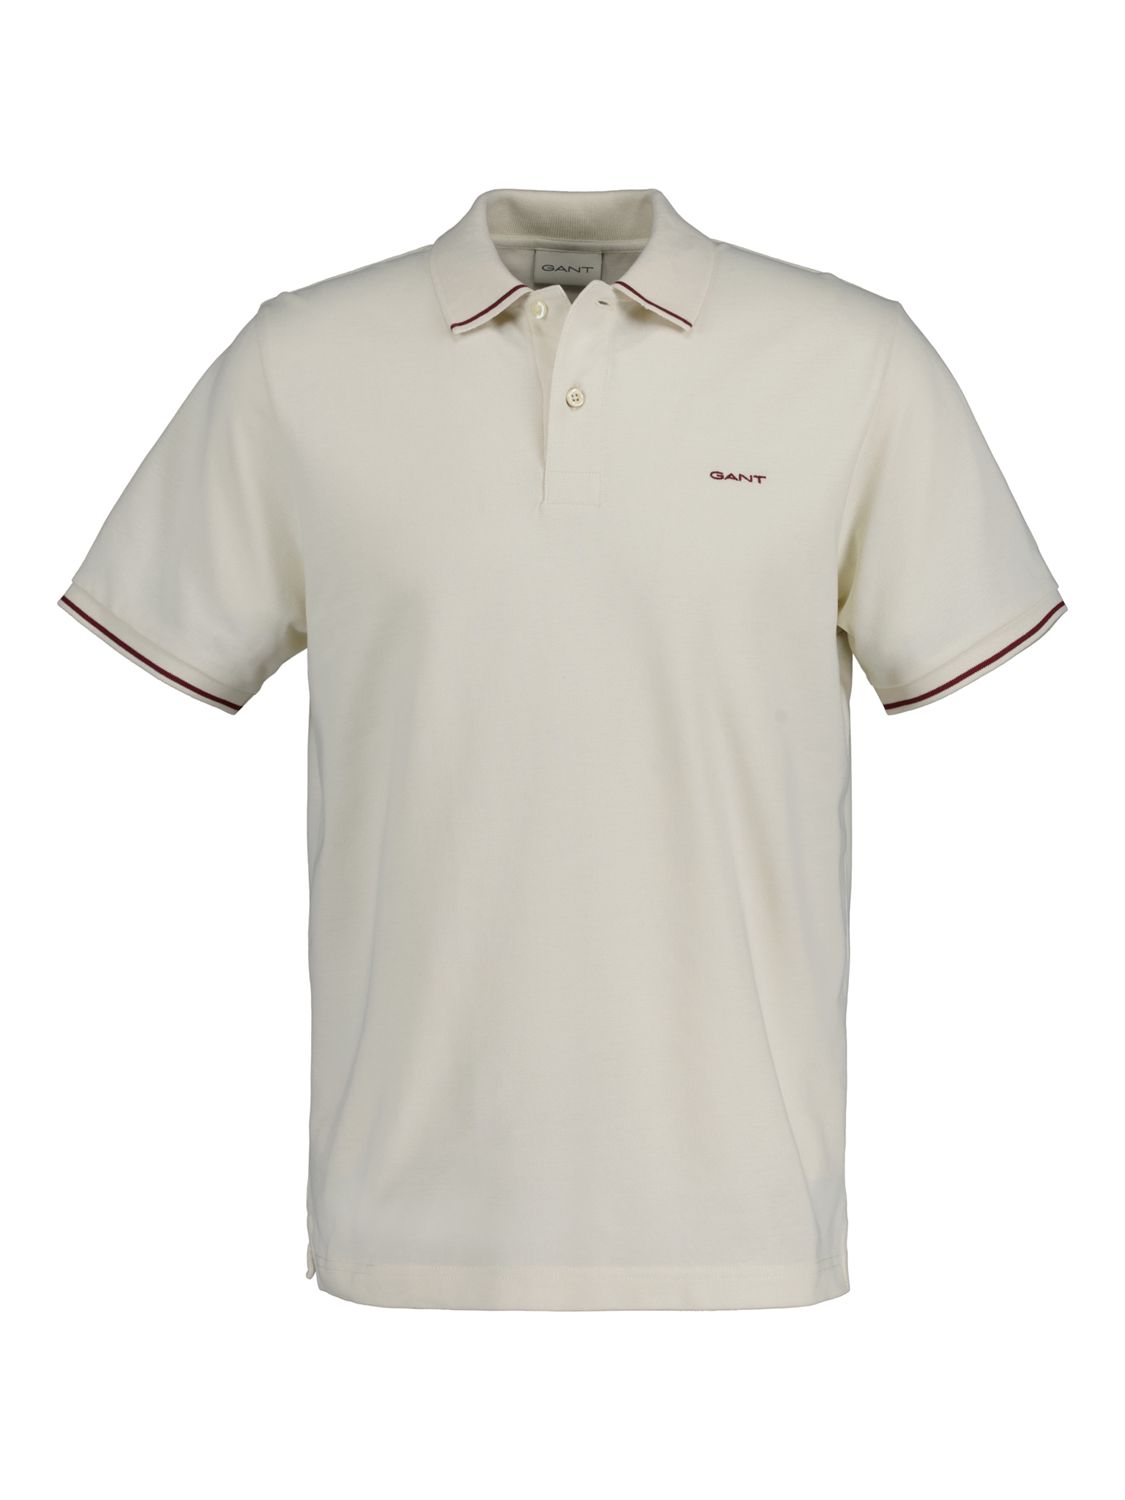 GANT Tipping Short Sleeve Rugger Polo Shirt, Cream, XL